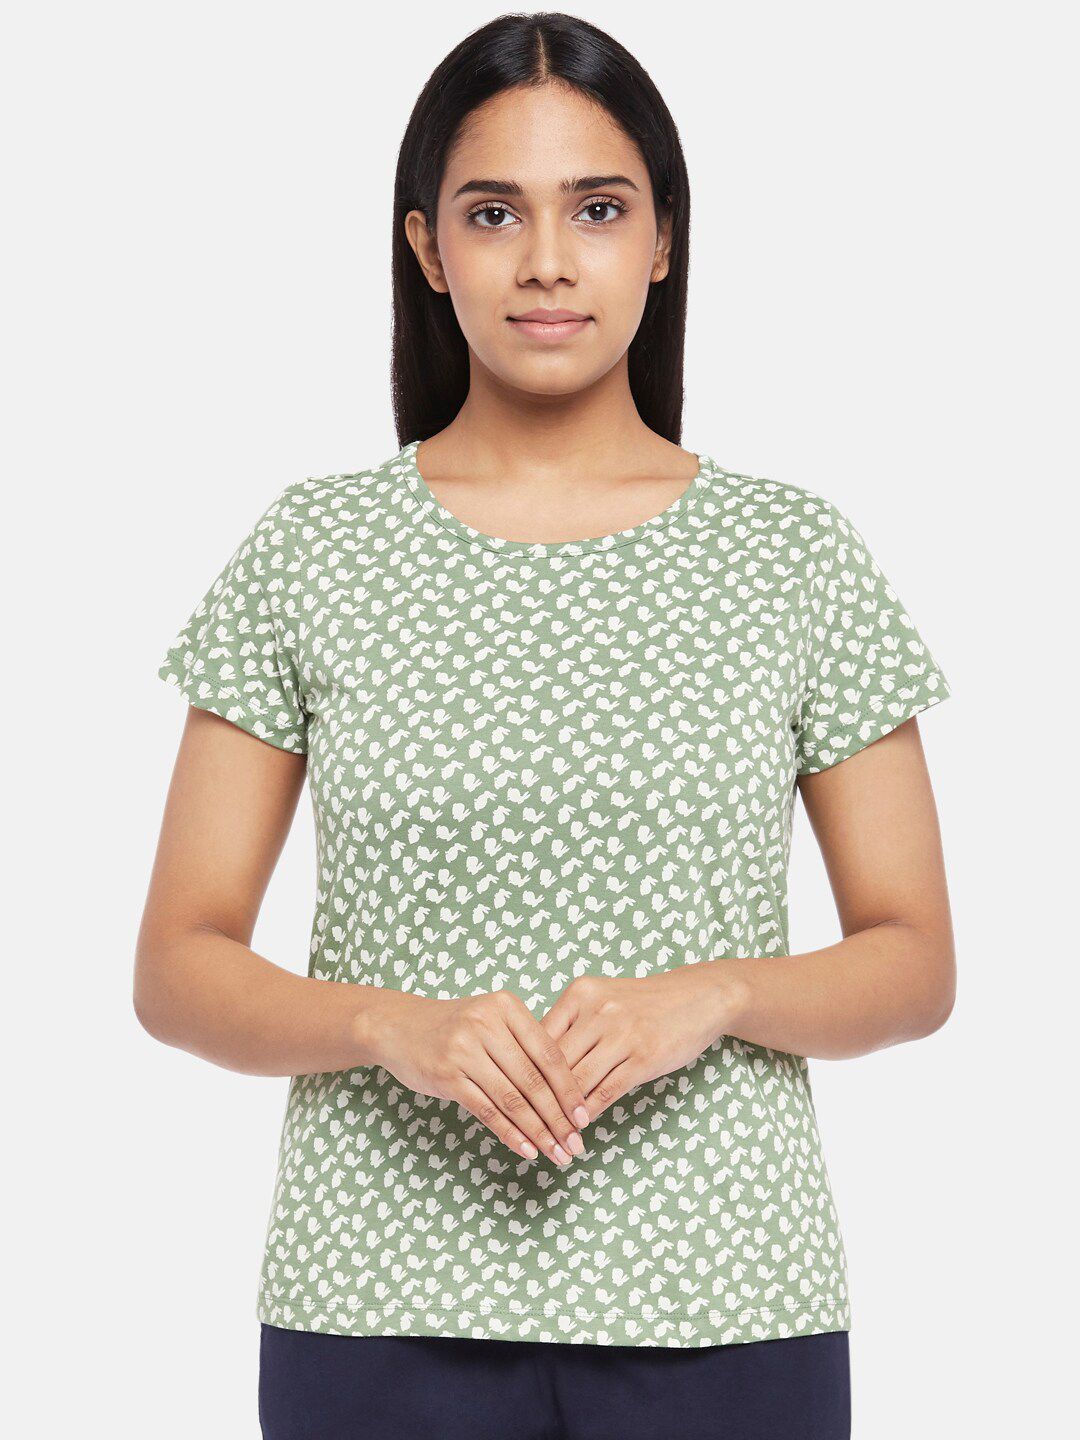 Dreamz by Pantaloons Green Conversational Printed Regular Lounge tshirt Price in India